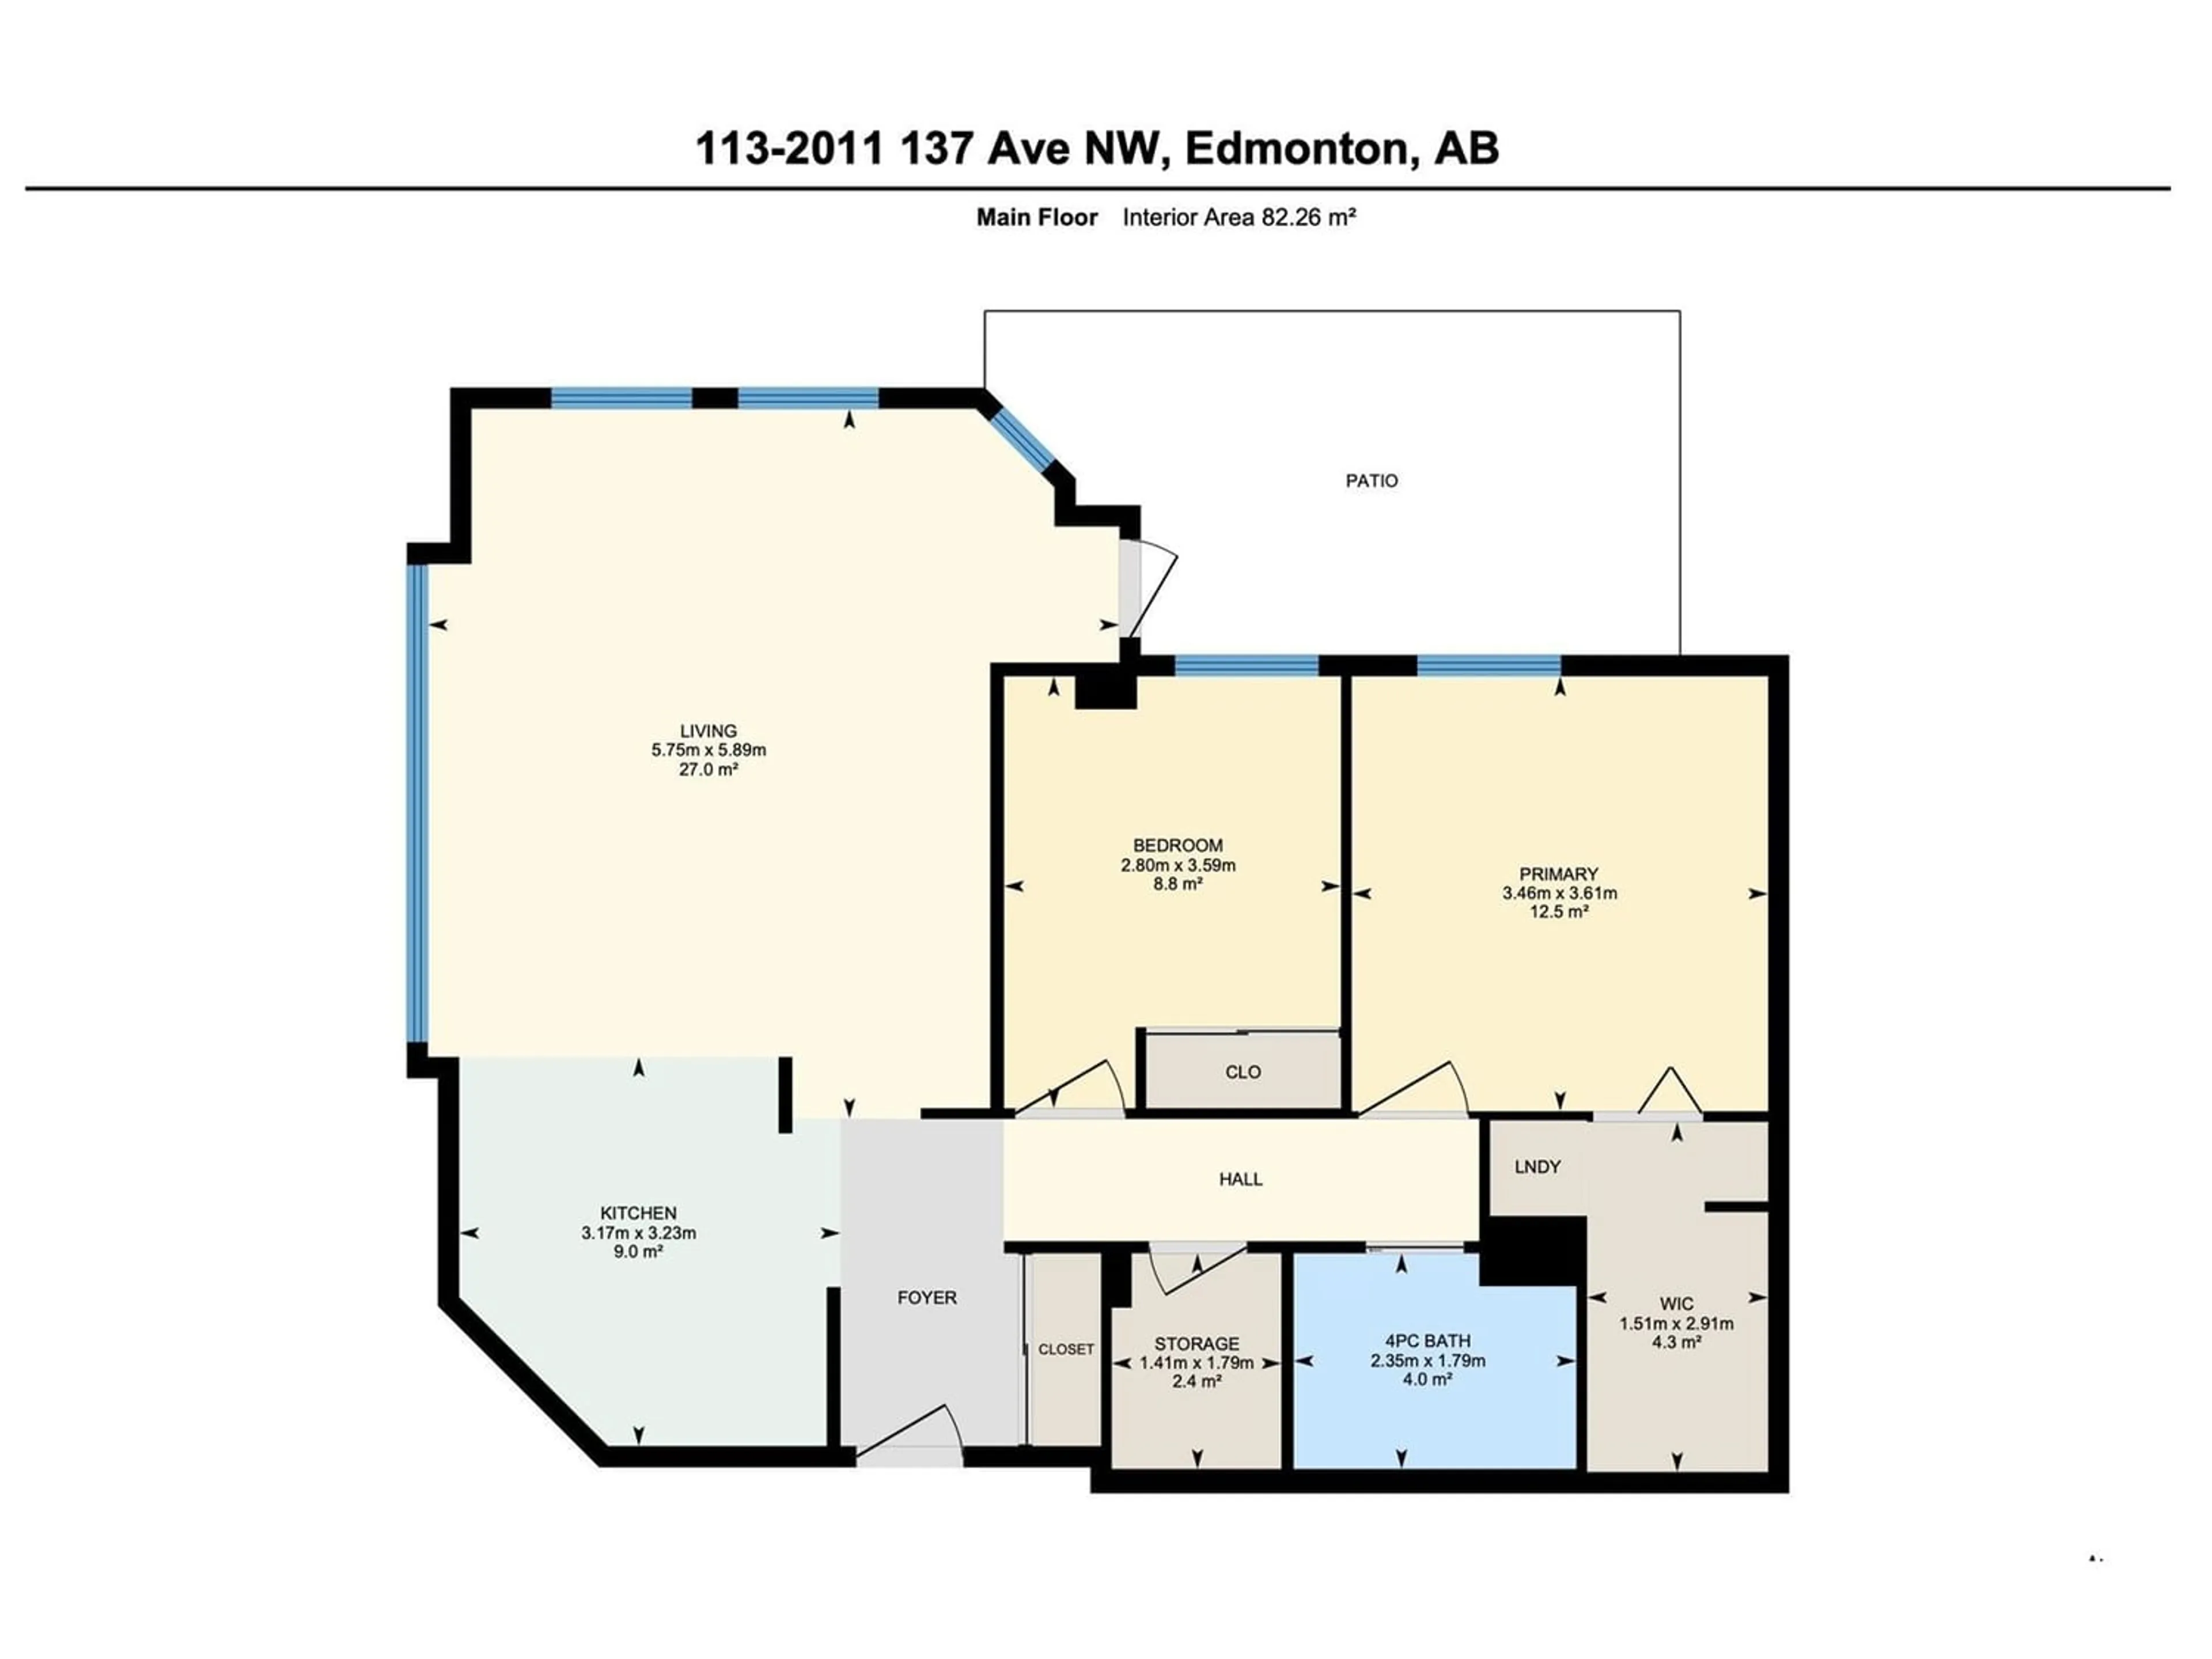 Floor plan for #113 2011 137 AV NW, Edmonton Alberta T5A4W2